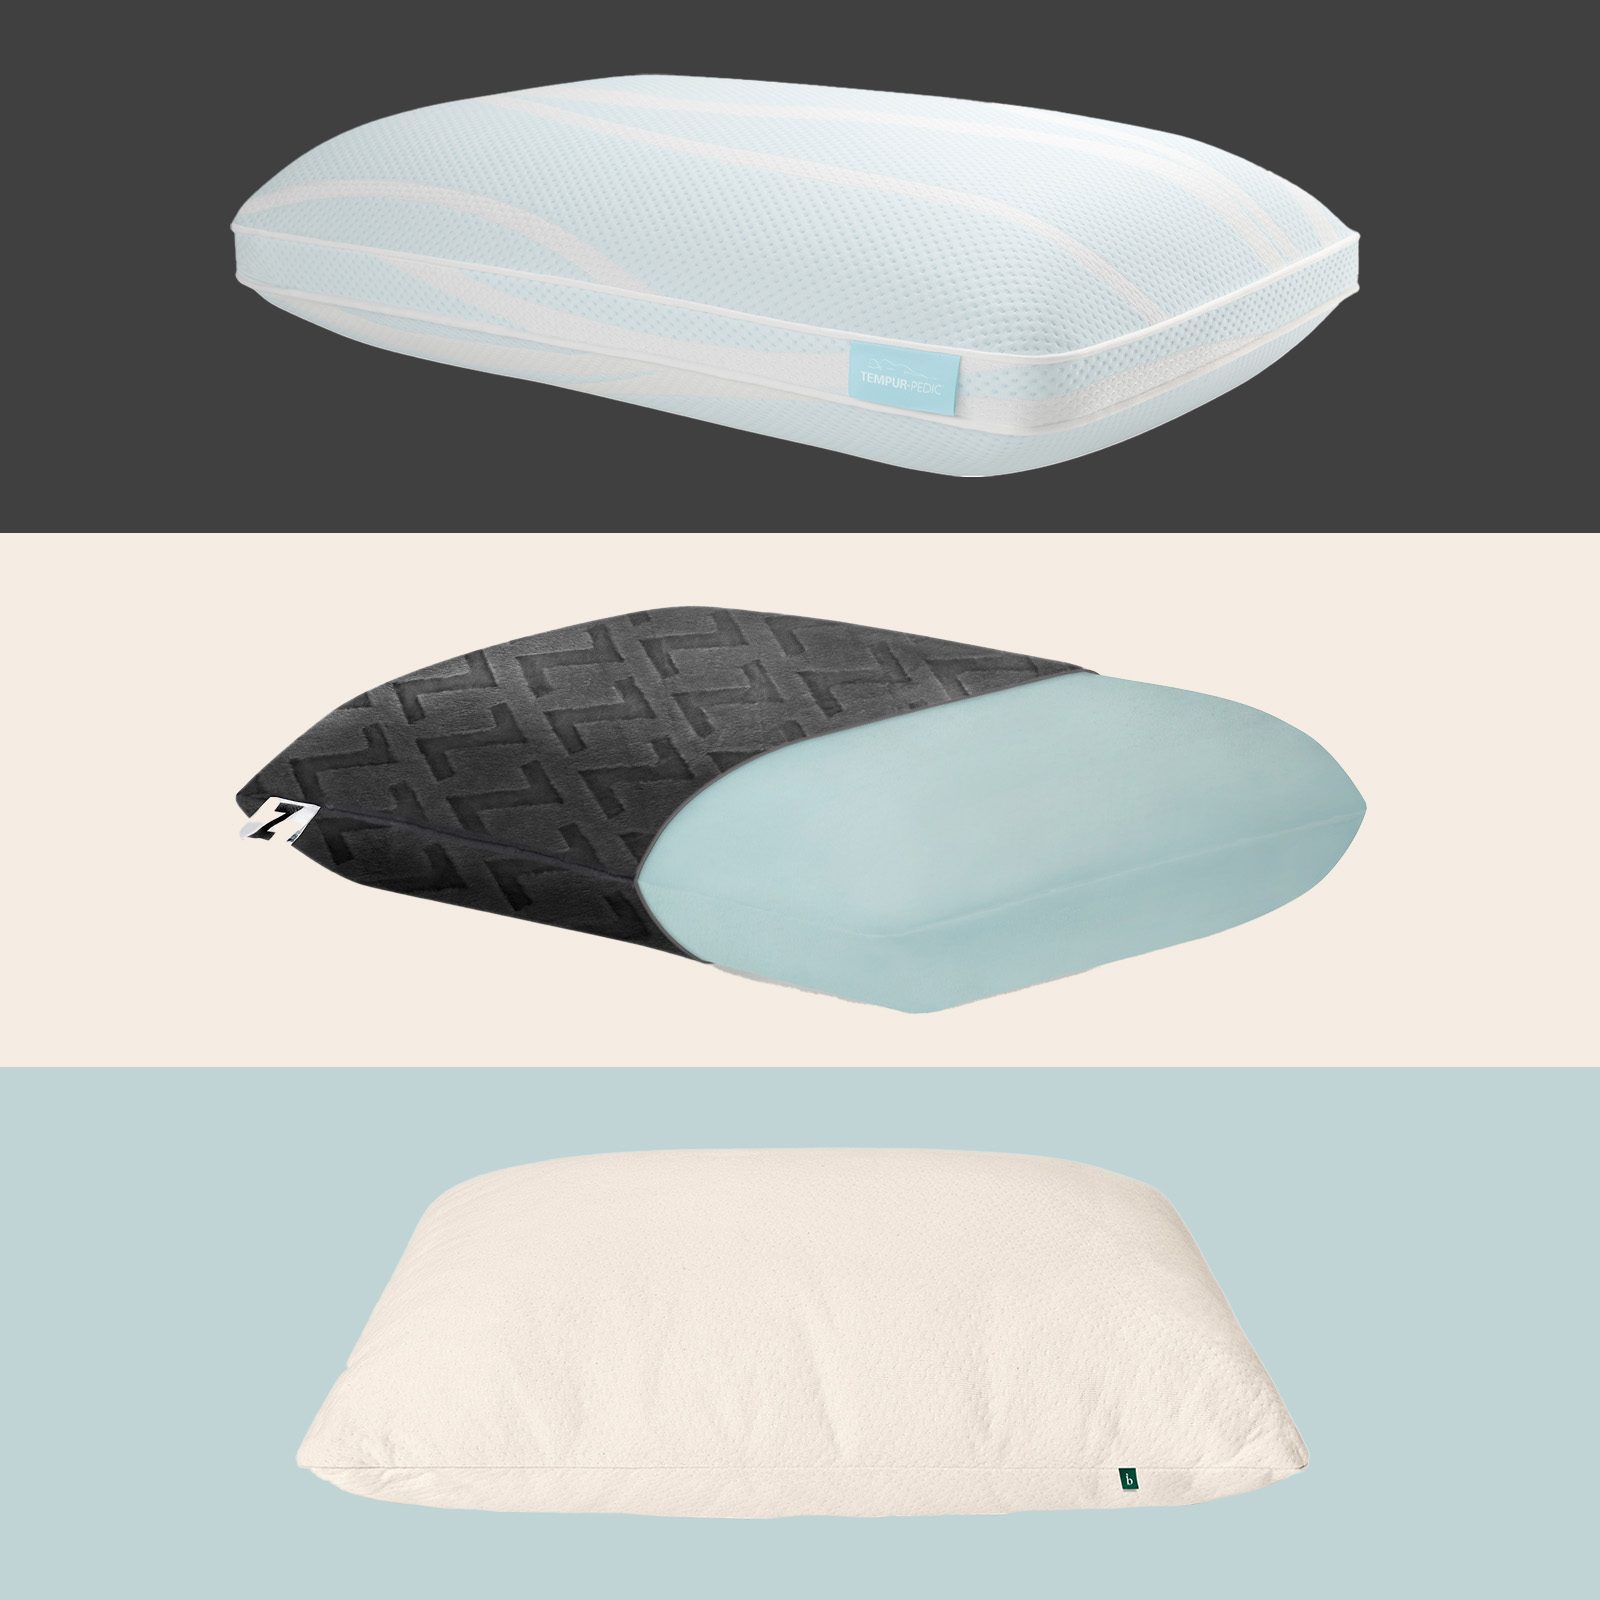 Las 12 mejores almohadas refrescantes para personas que duermen con calor 2021